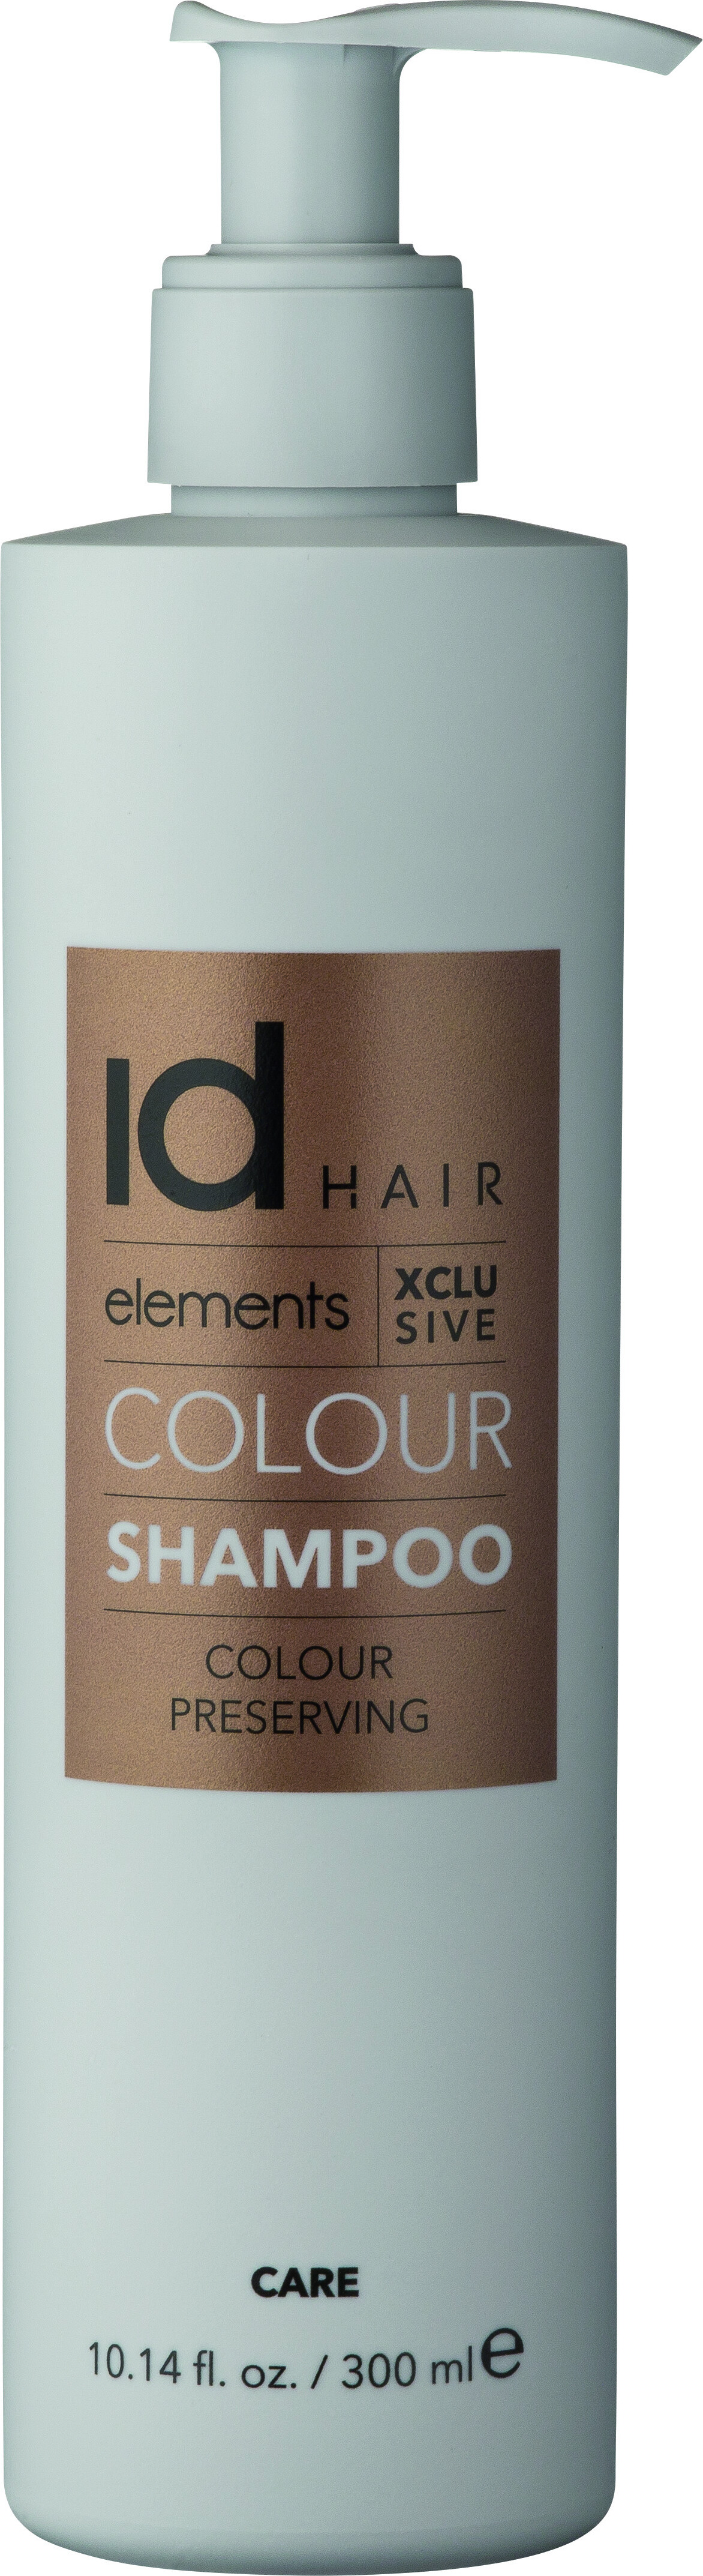 Billede af Id Hair - Elements Xclusive Colour Shampoo - 300 Ml